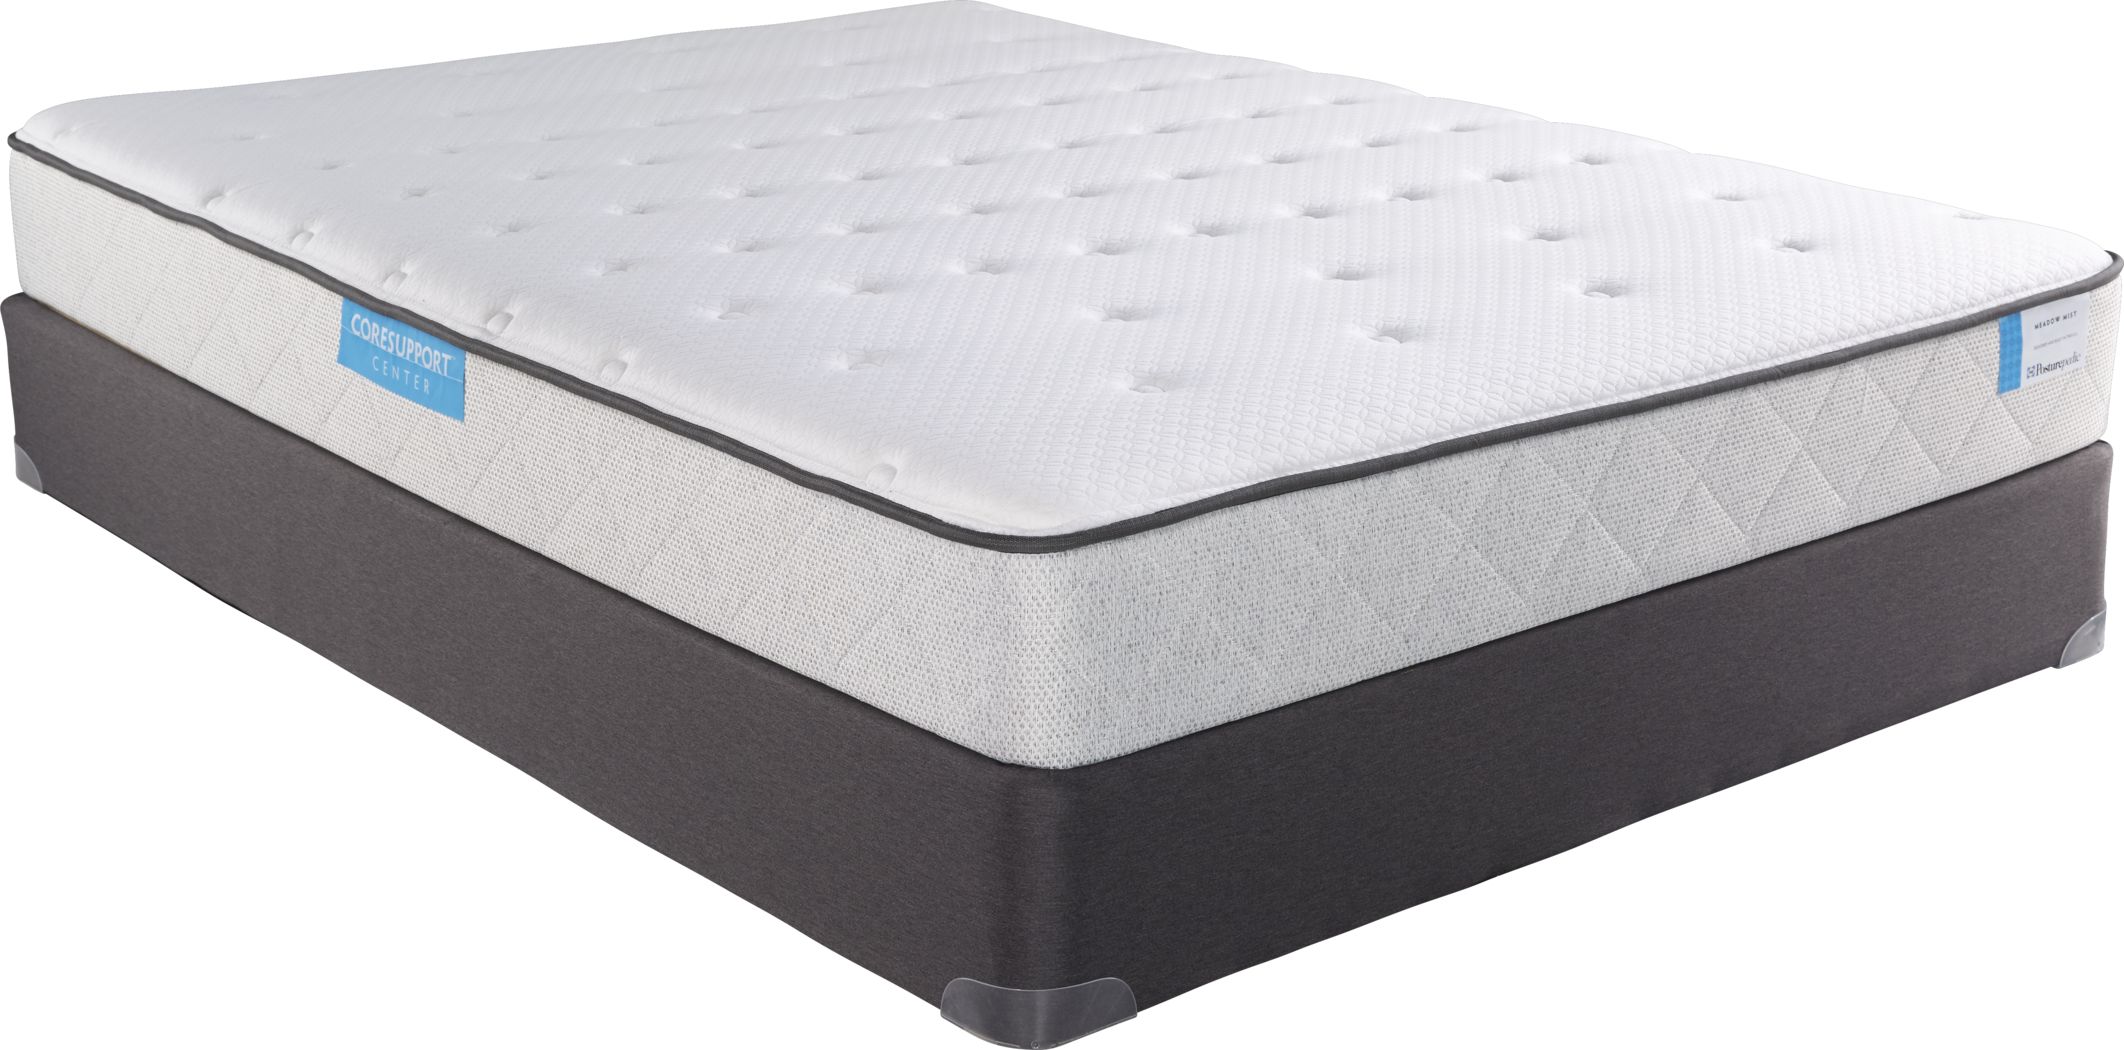 williams meadow posturepedic mattress